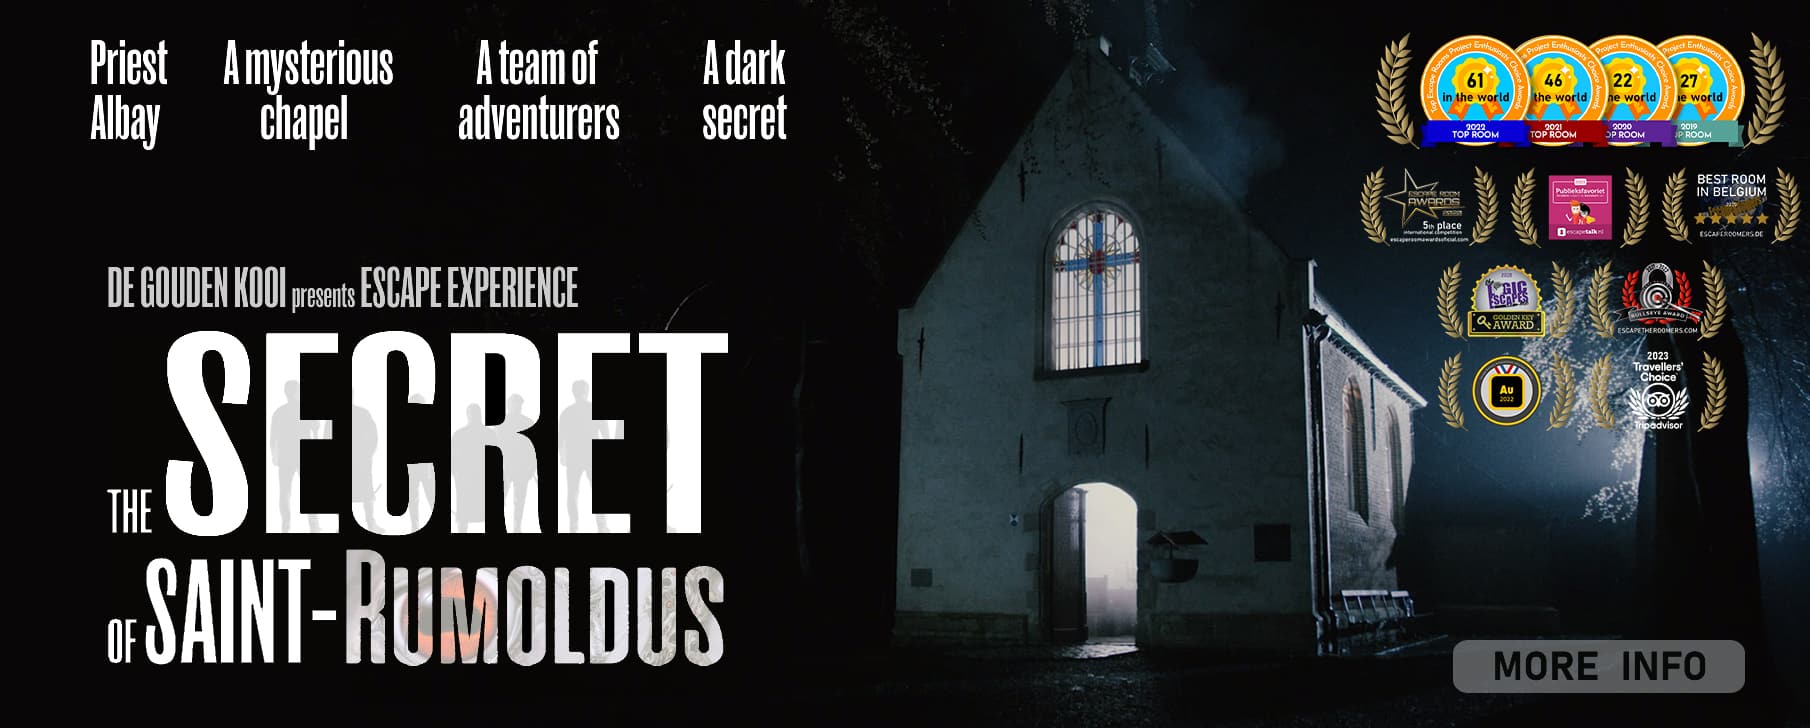 De Gouden Kooi escape experience - The secret of saint-Rumoldus